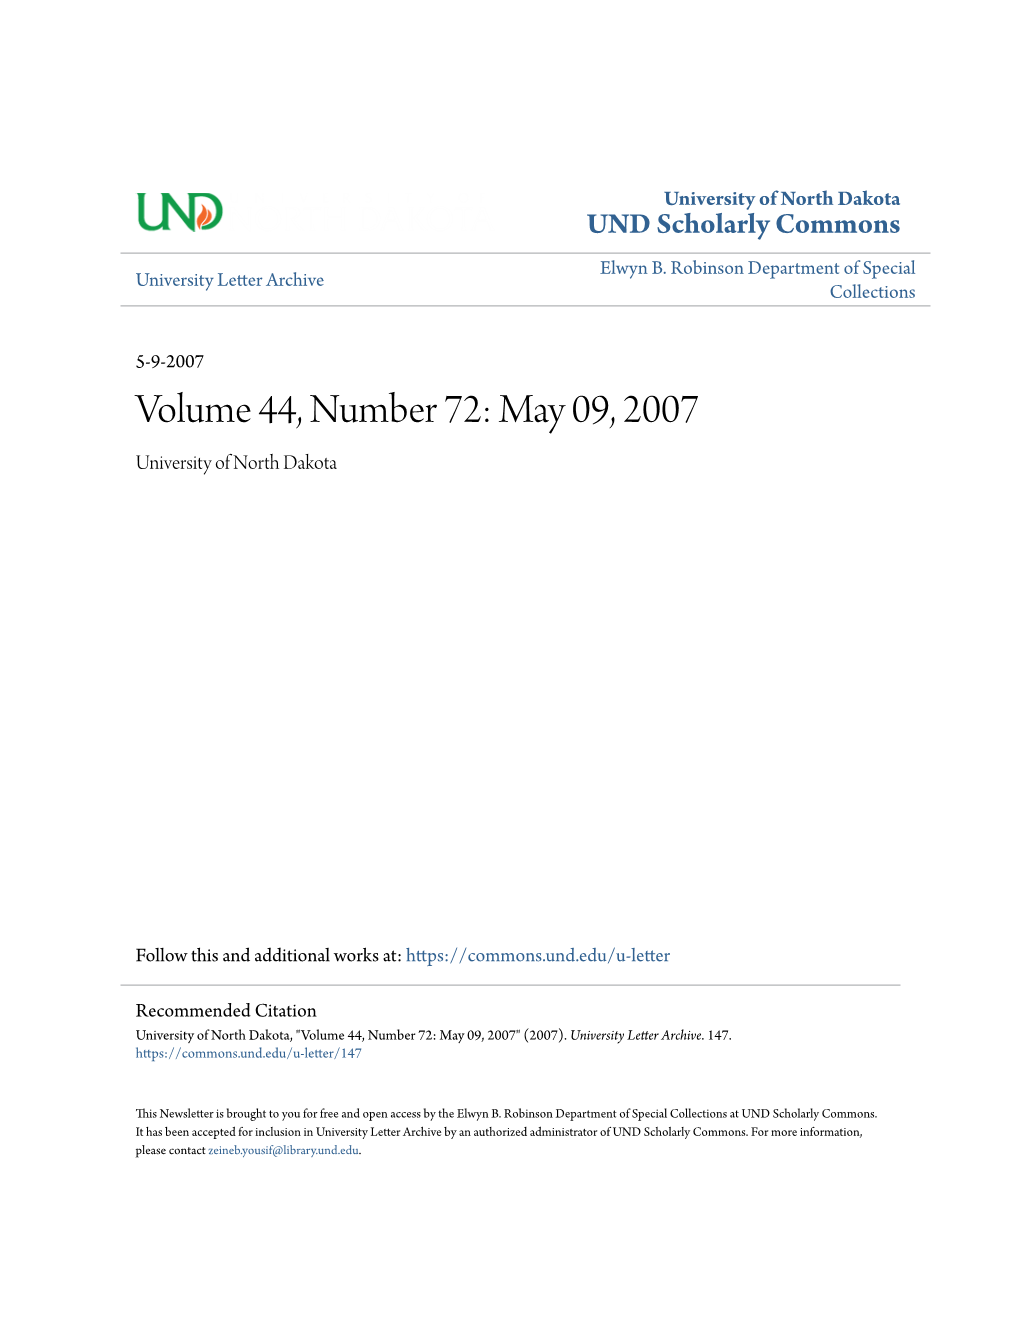 Volume 44, Number 72: May 09, 2007 University of North Dakota